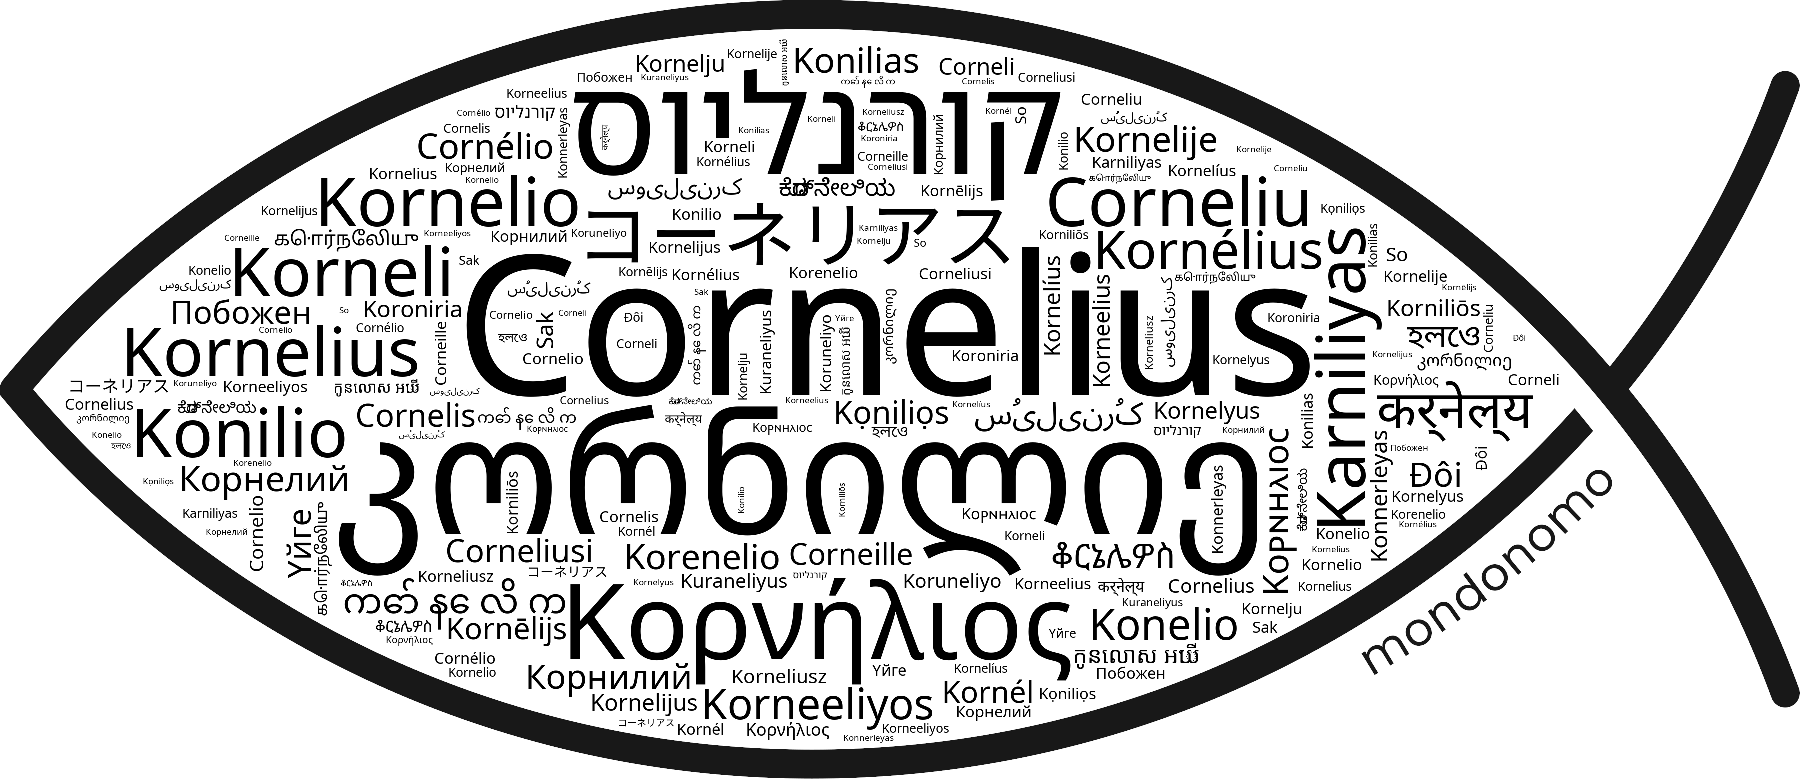 Name Cornelius in the world's Bibles